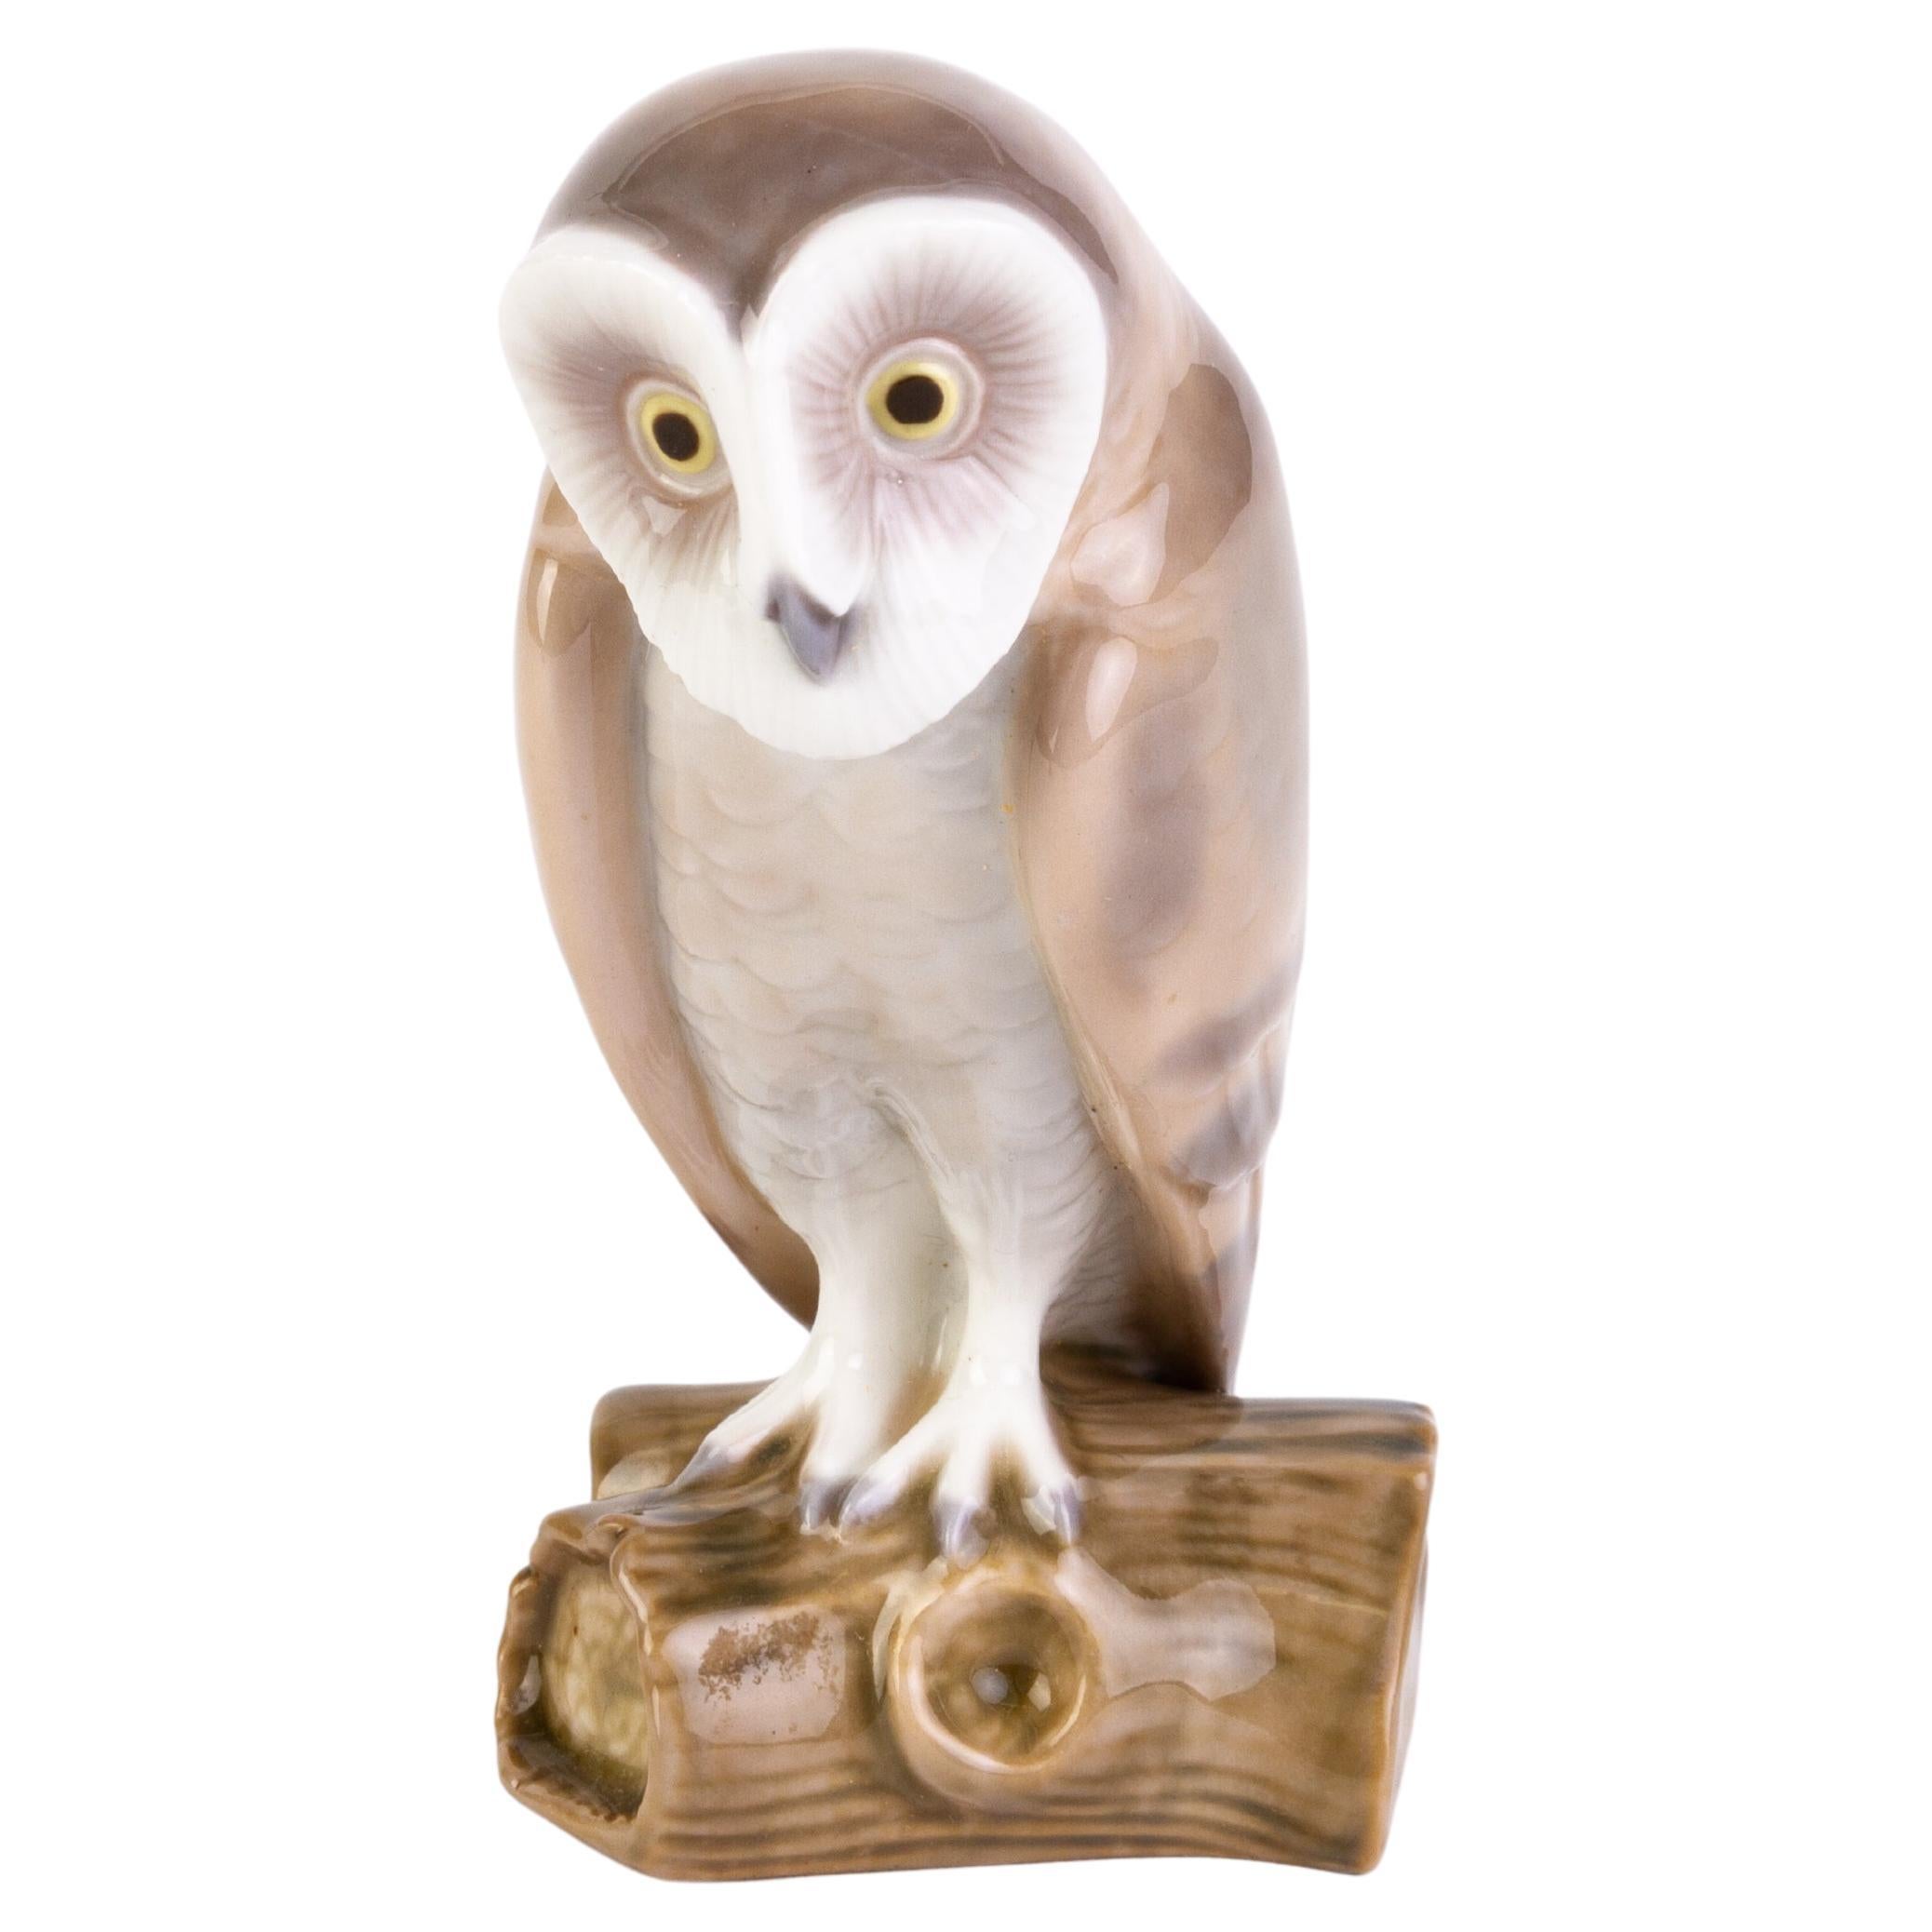 Retired Lladro Fine Porcelain Sculpture Figure Group "Barn Owl" 5421 For Sale